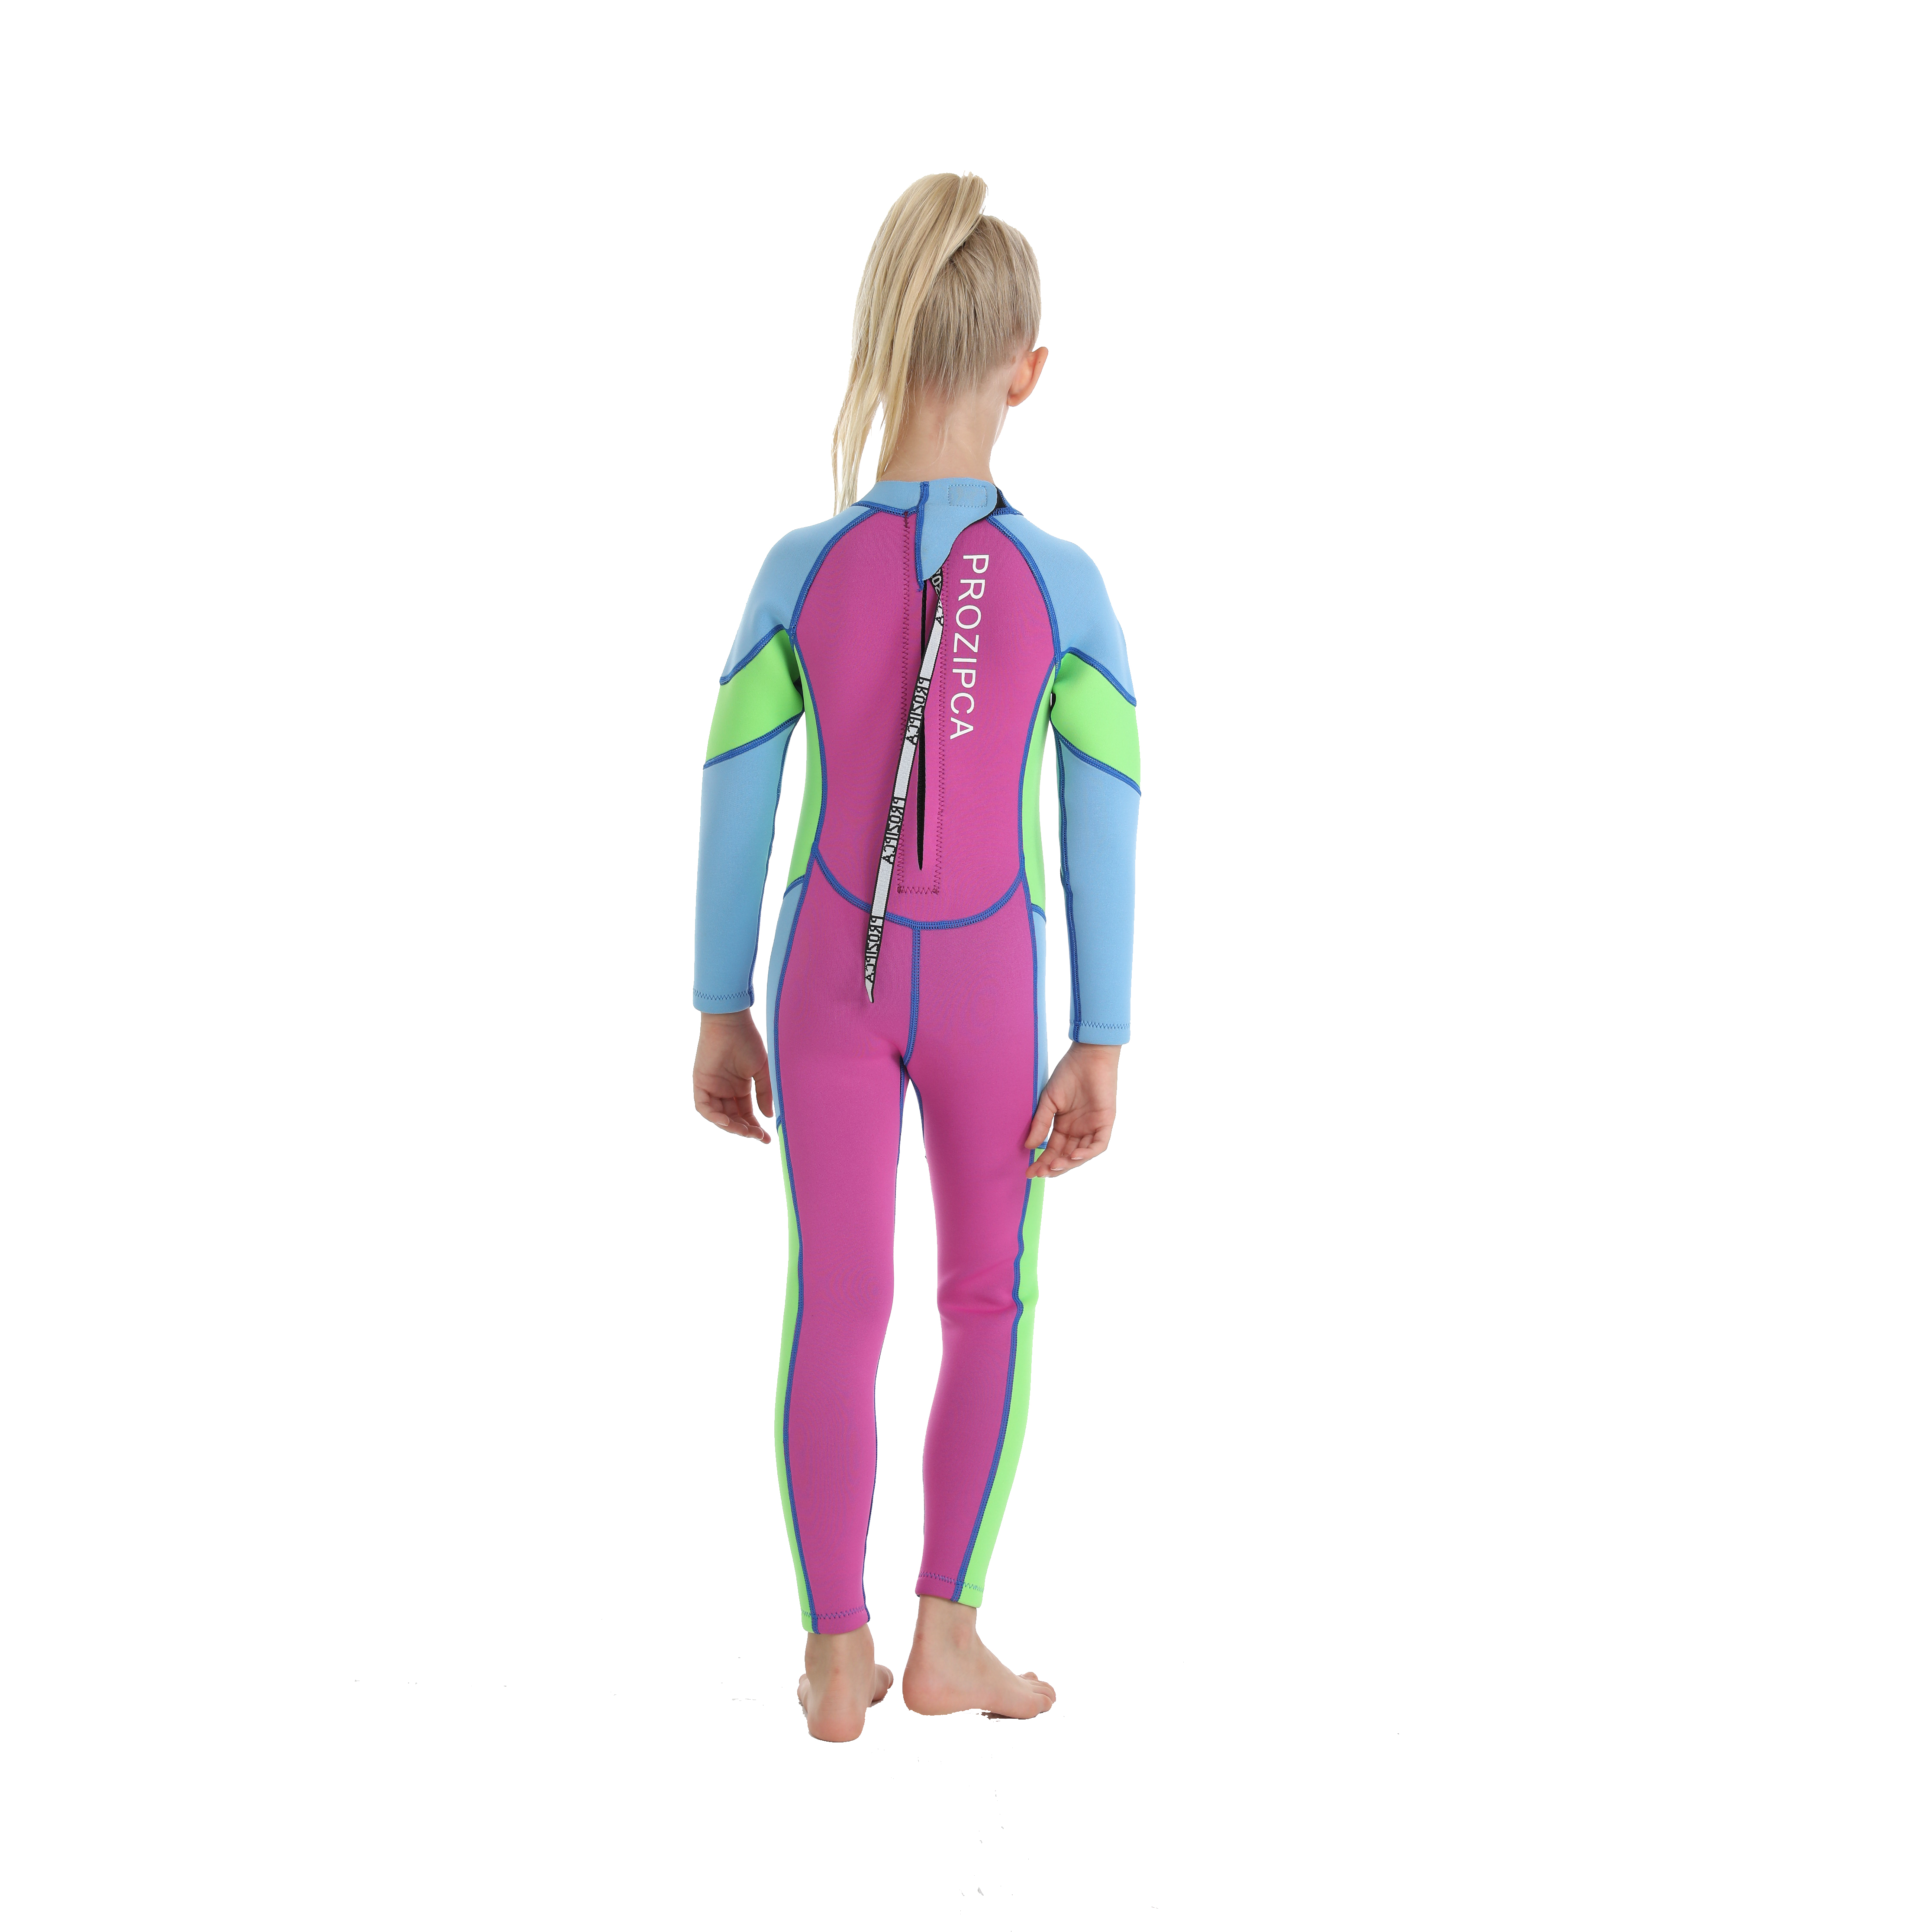 New Design Thermal Long Sleeve Girls Swimming Children Suits Diving Surfing 2.5Mm Yamamoto Neoprene Kids Wetsuit